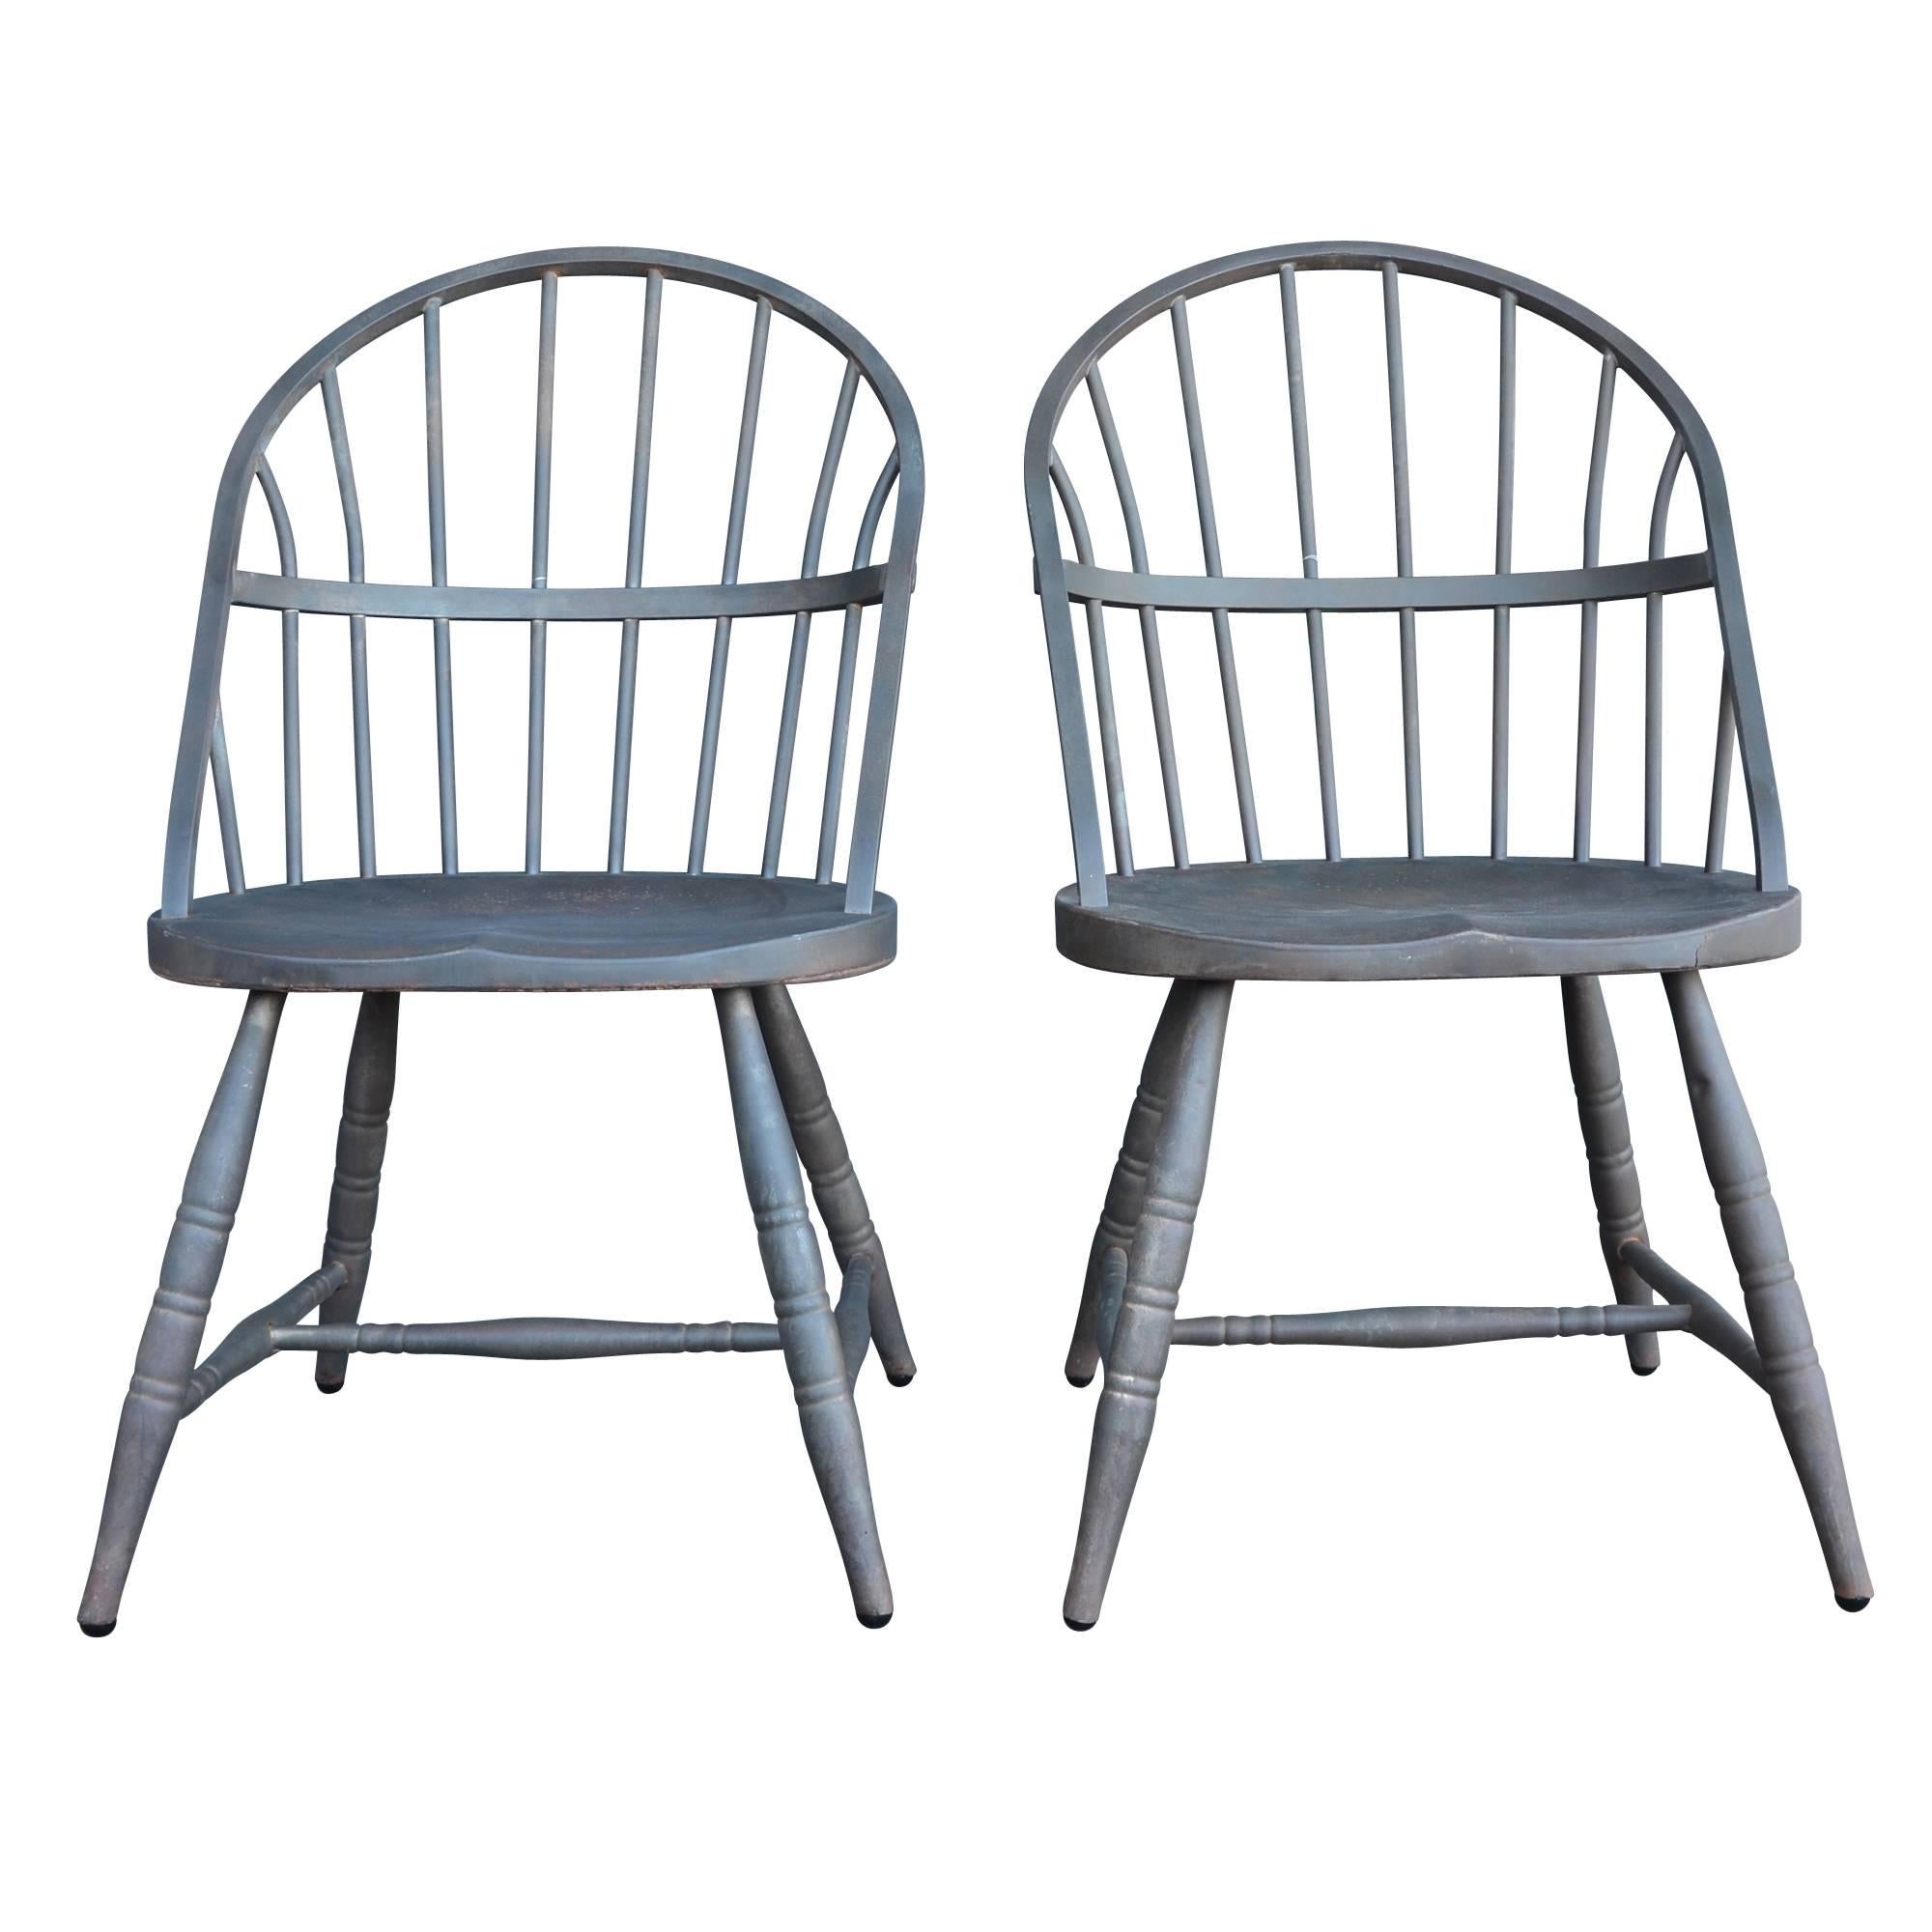 Pair of Raw Steel Windsor Chairs, circa 1920